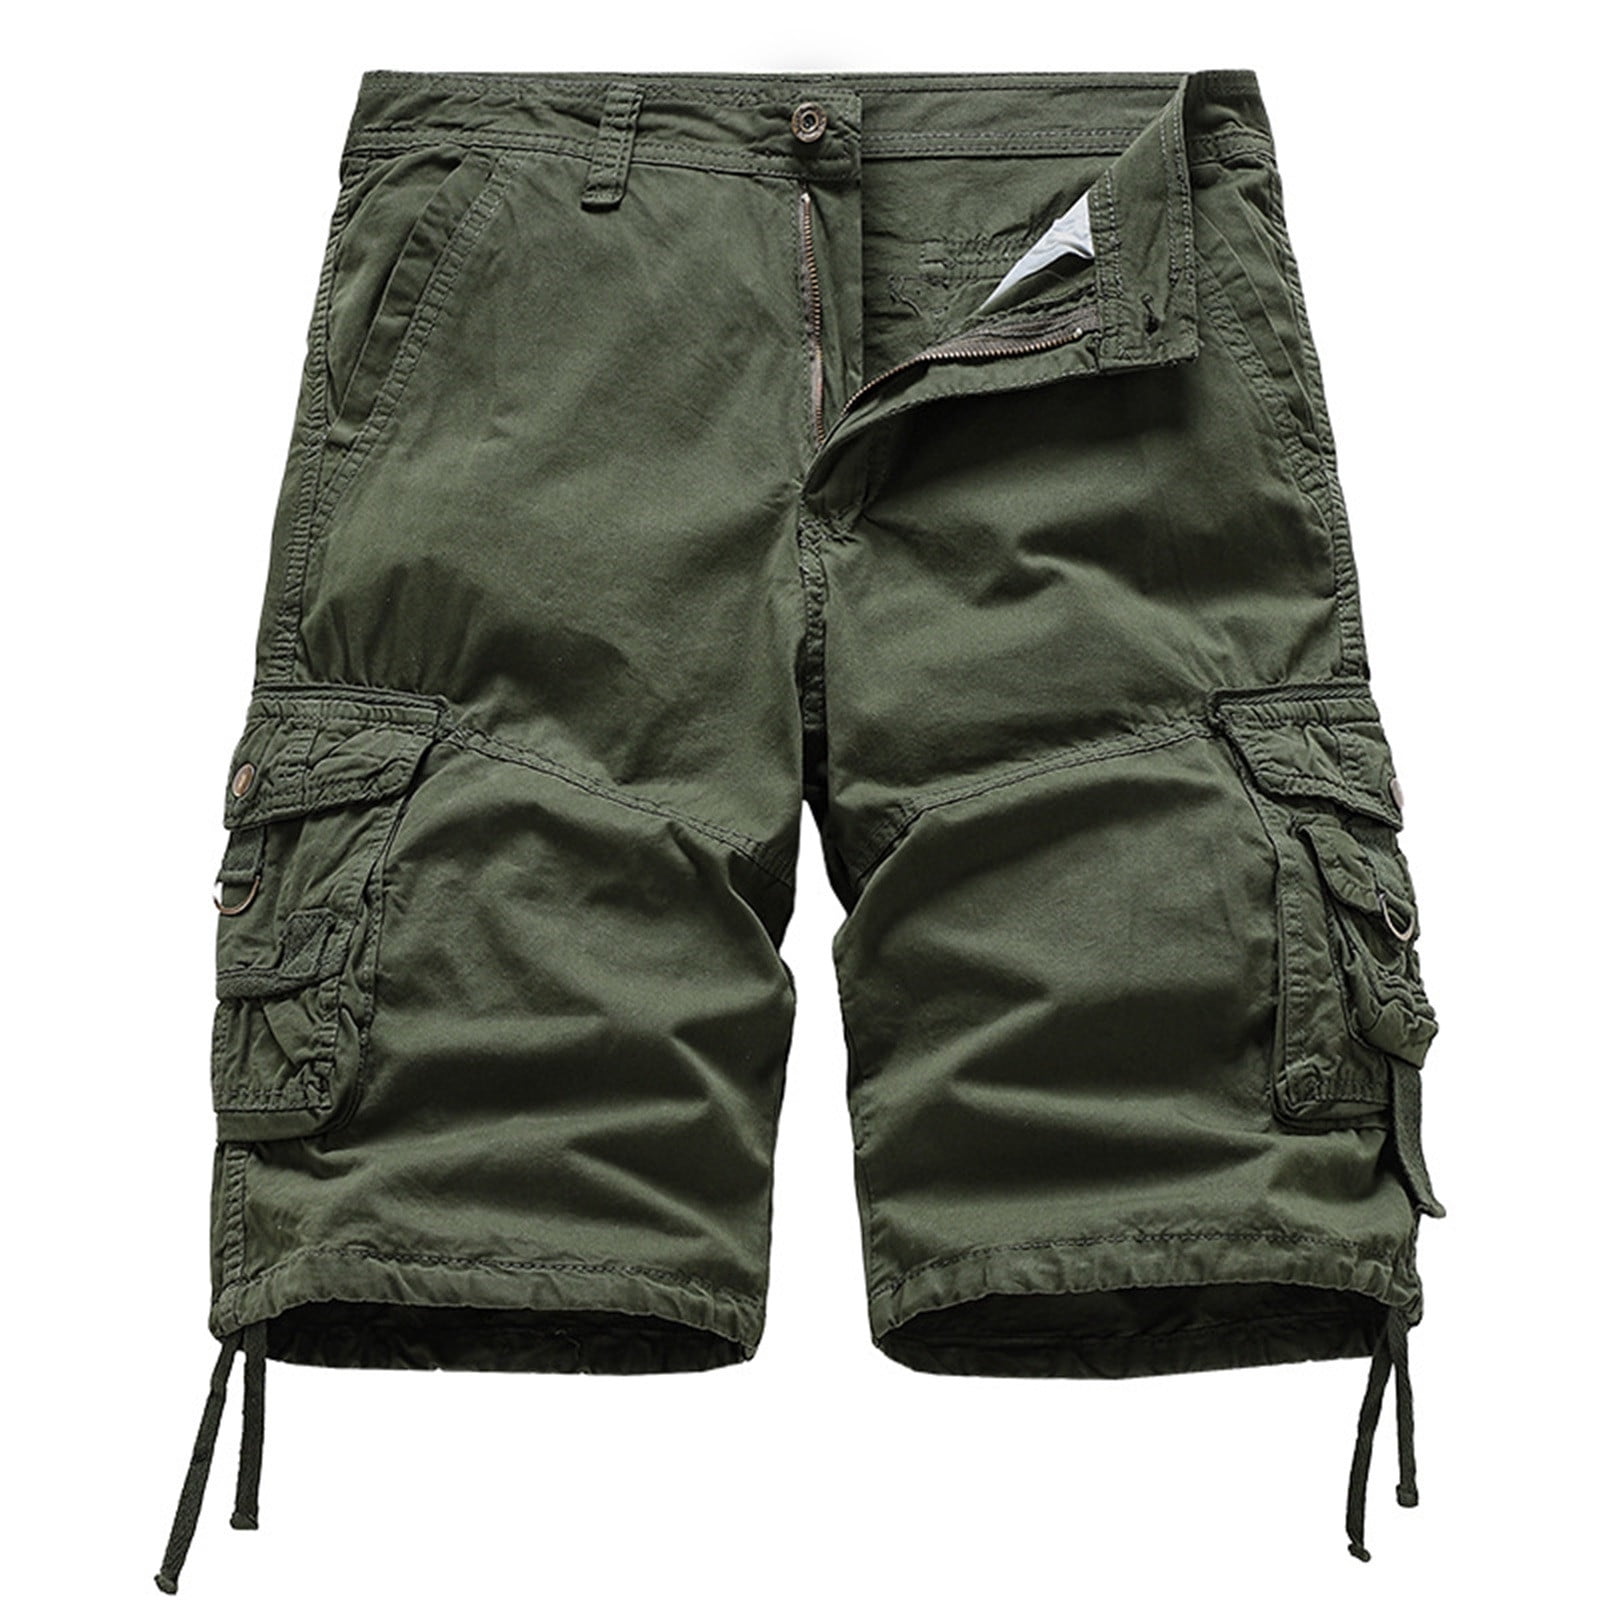 AdBFJAF Cargo Pants for Men Big and Tall Men's Cargo Short Casual ...